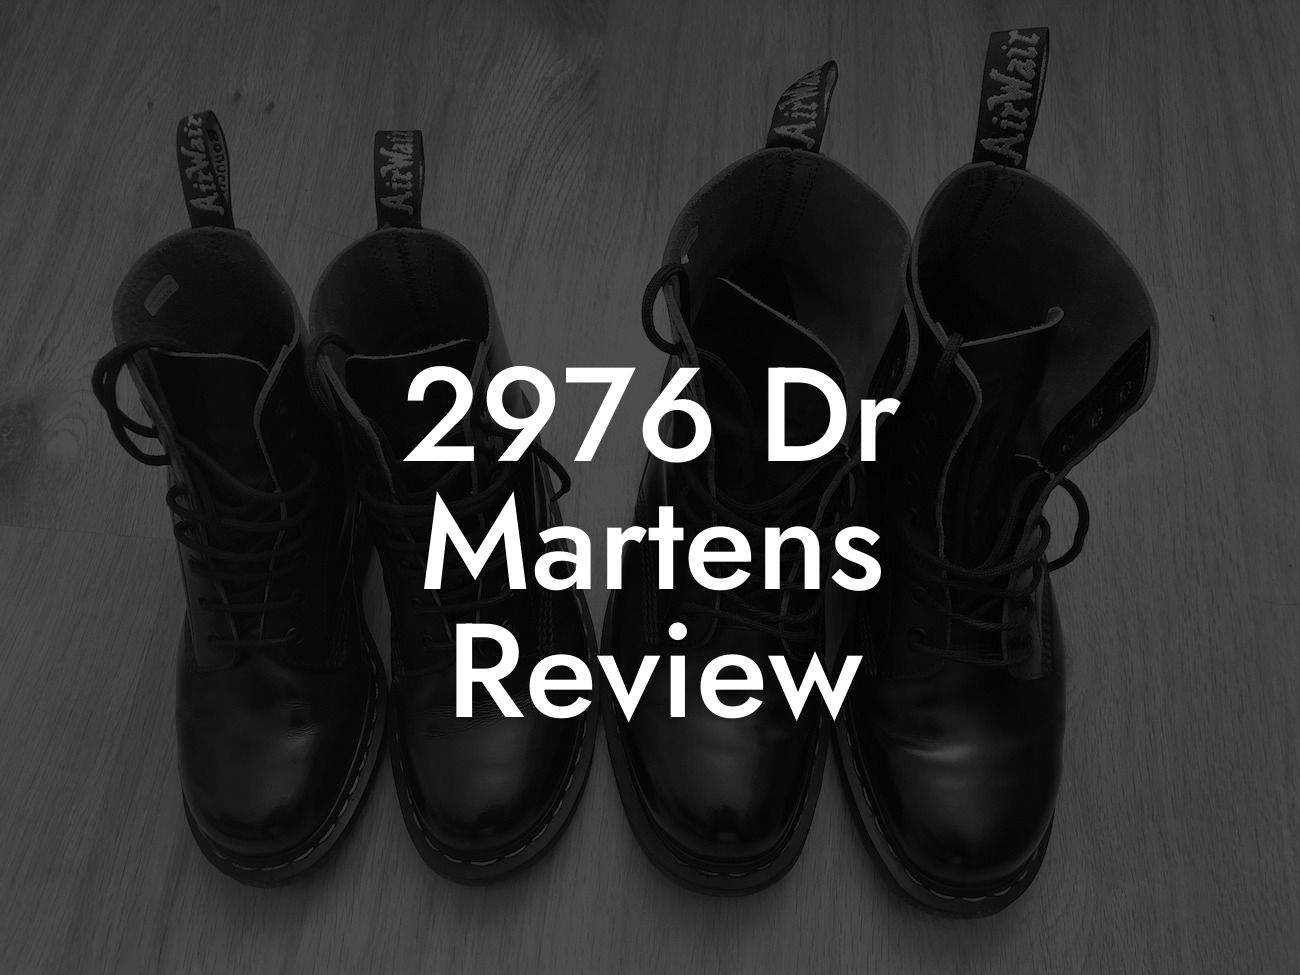 2976 Dr Martens Review